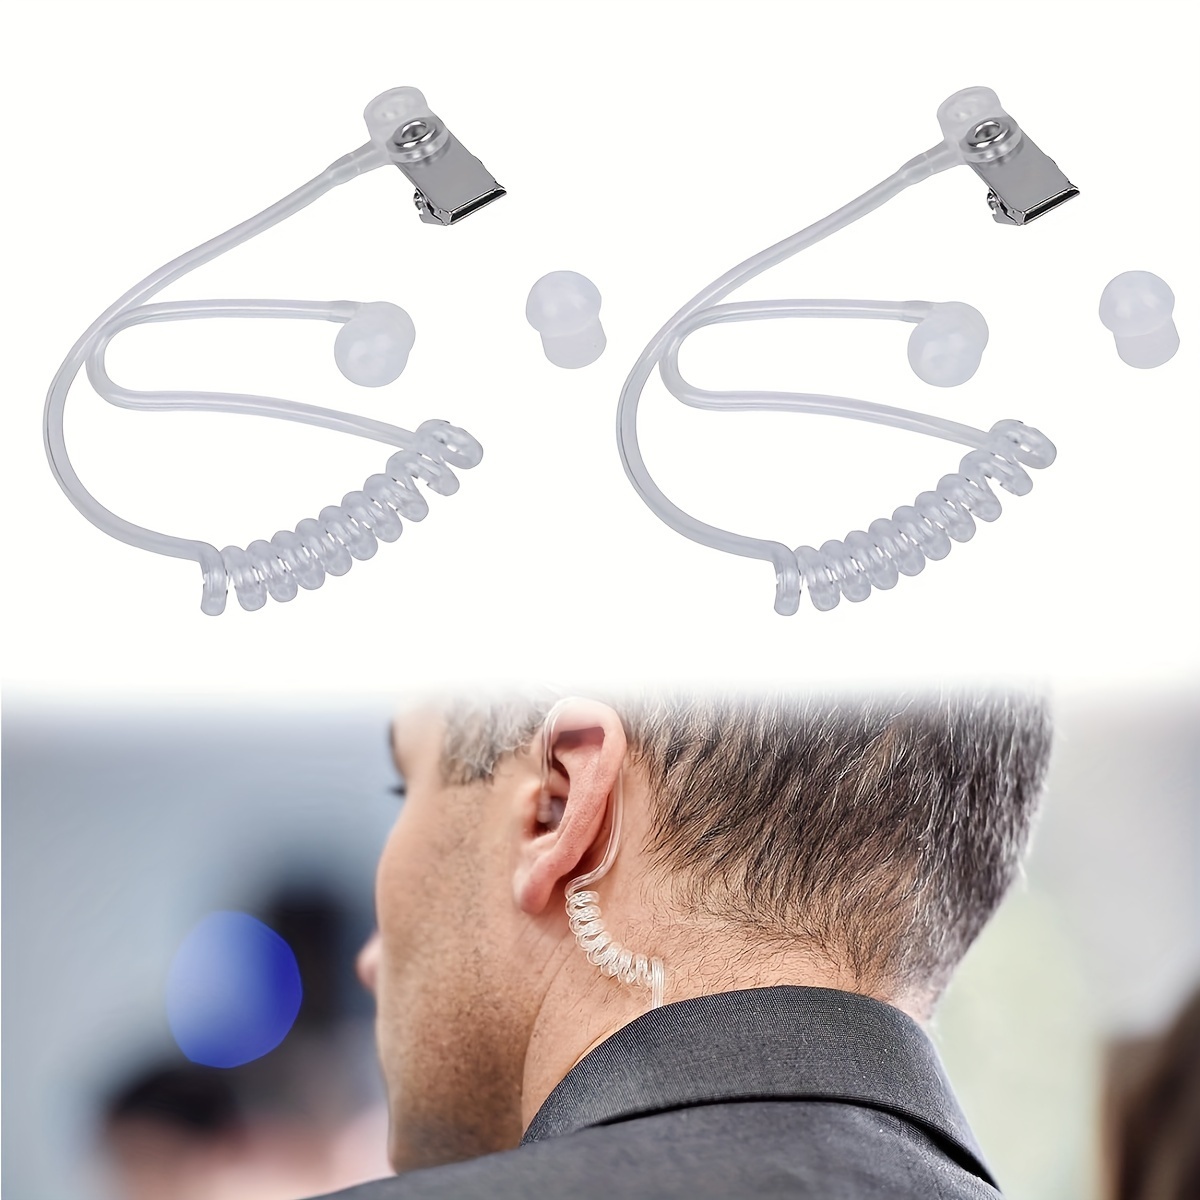 

2pcs In-ear Headphones, Security Earphones, Secret Stage Performance Prop, Replacement Acoustic Tube For Wireless Headphones (transparent)